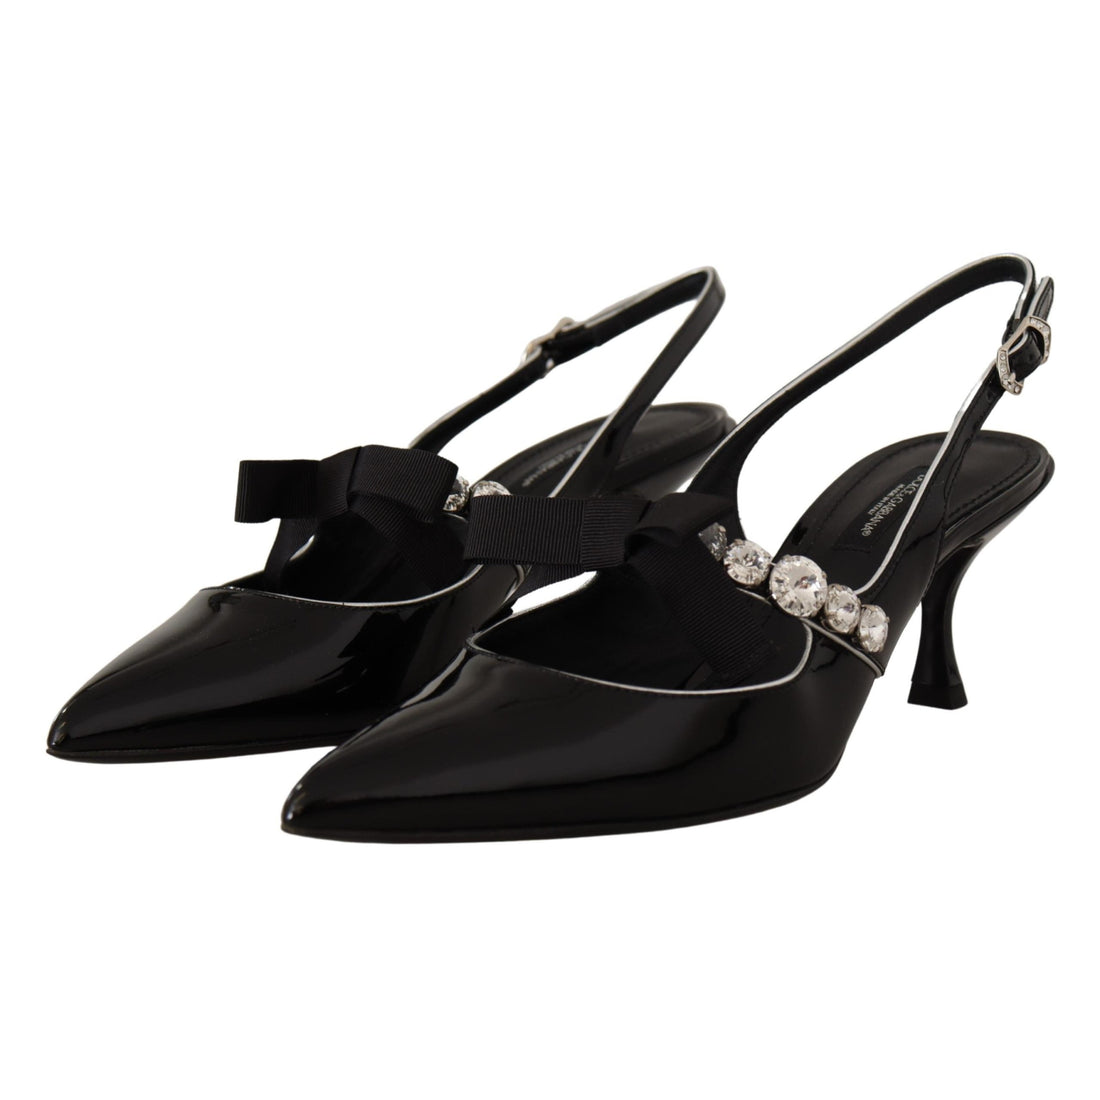 Dolce & Gabbana Black Patent Leather Crystal Slingbacks Shoes